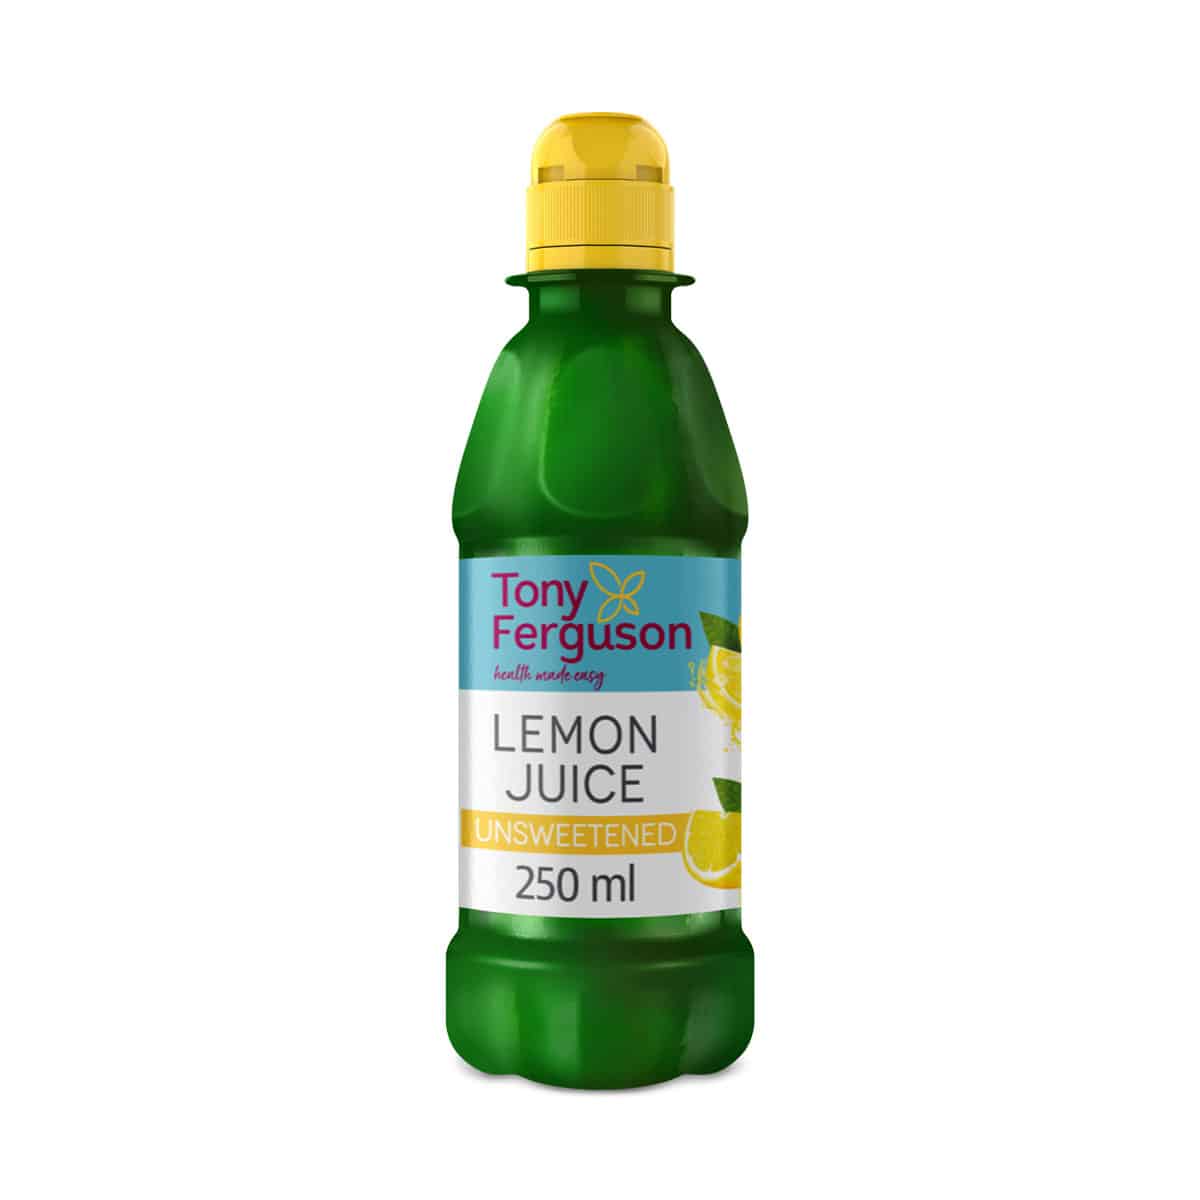 Tony Ferguson Unsweetened Lemon Juice - 250ml